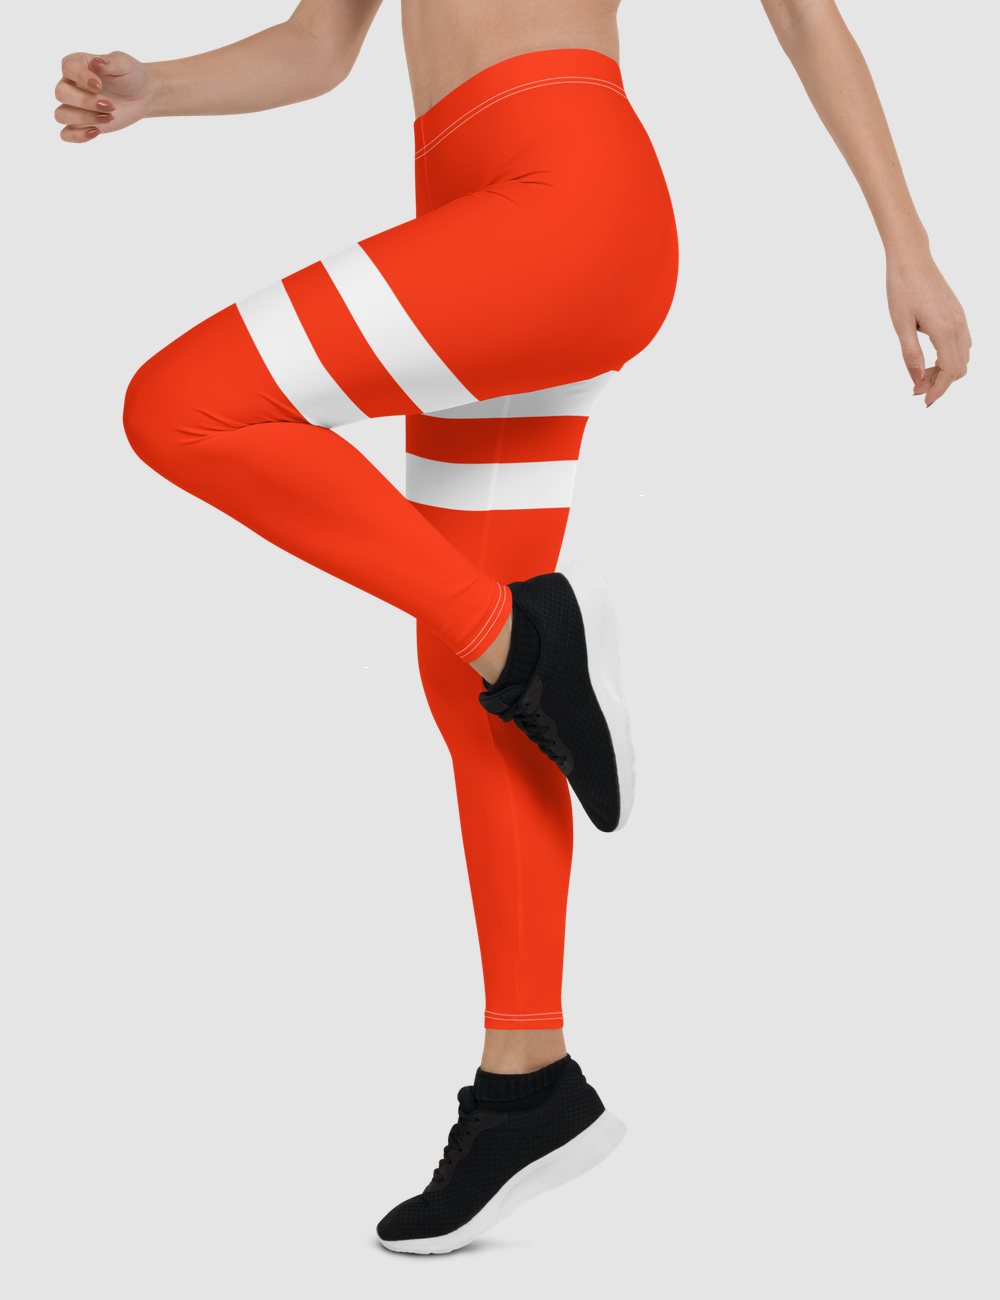 Red And White Double Thigh Striped | Women's Standard Yoga Leggings OniTakai